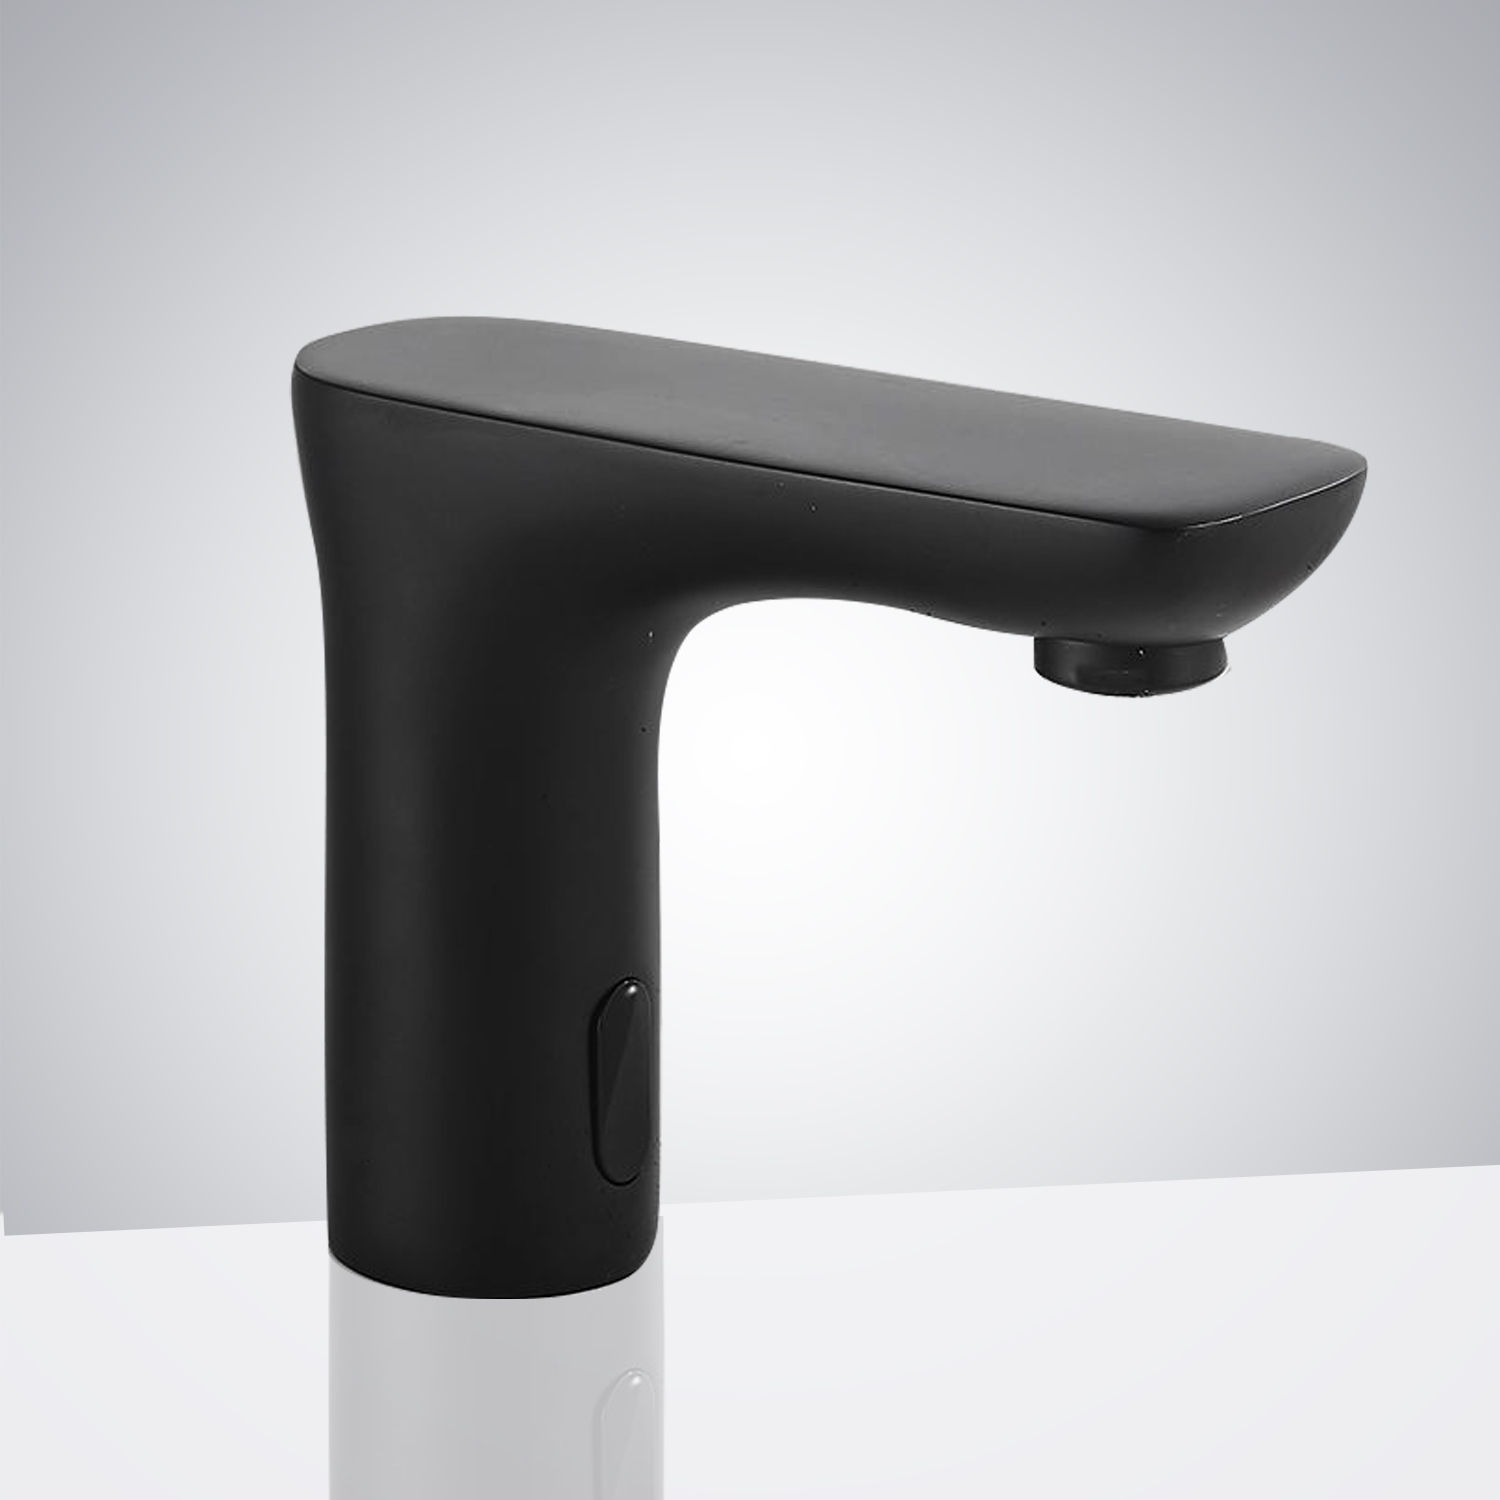 Fontana Touchless Commercial Automatic Sensor Faucet in Matte Black